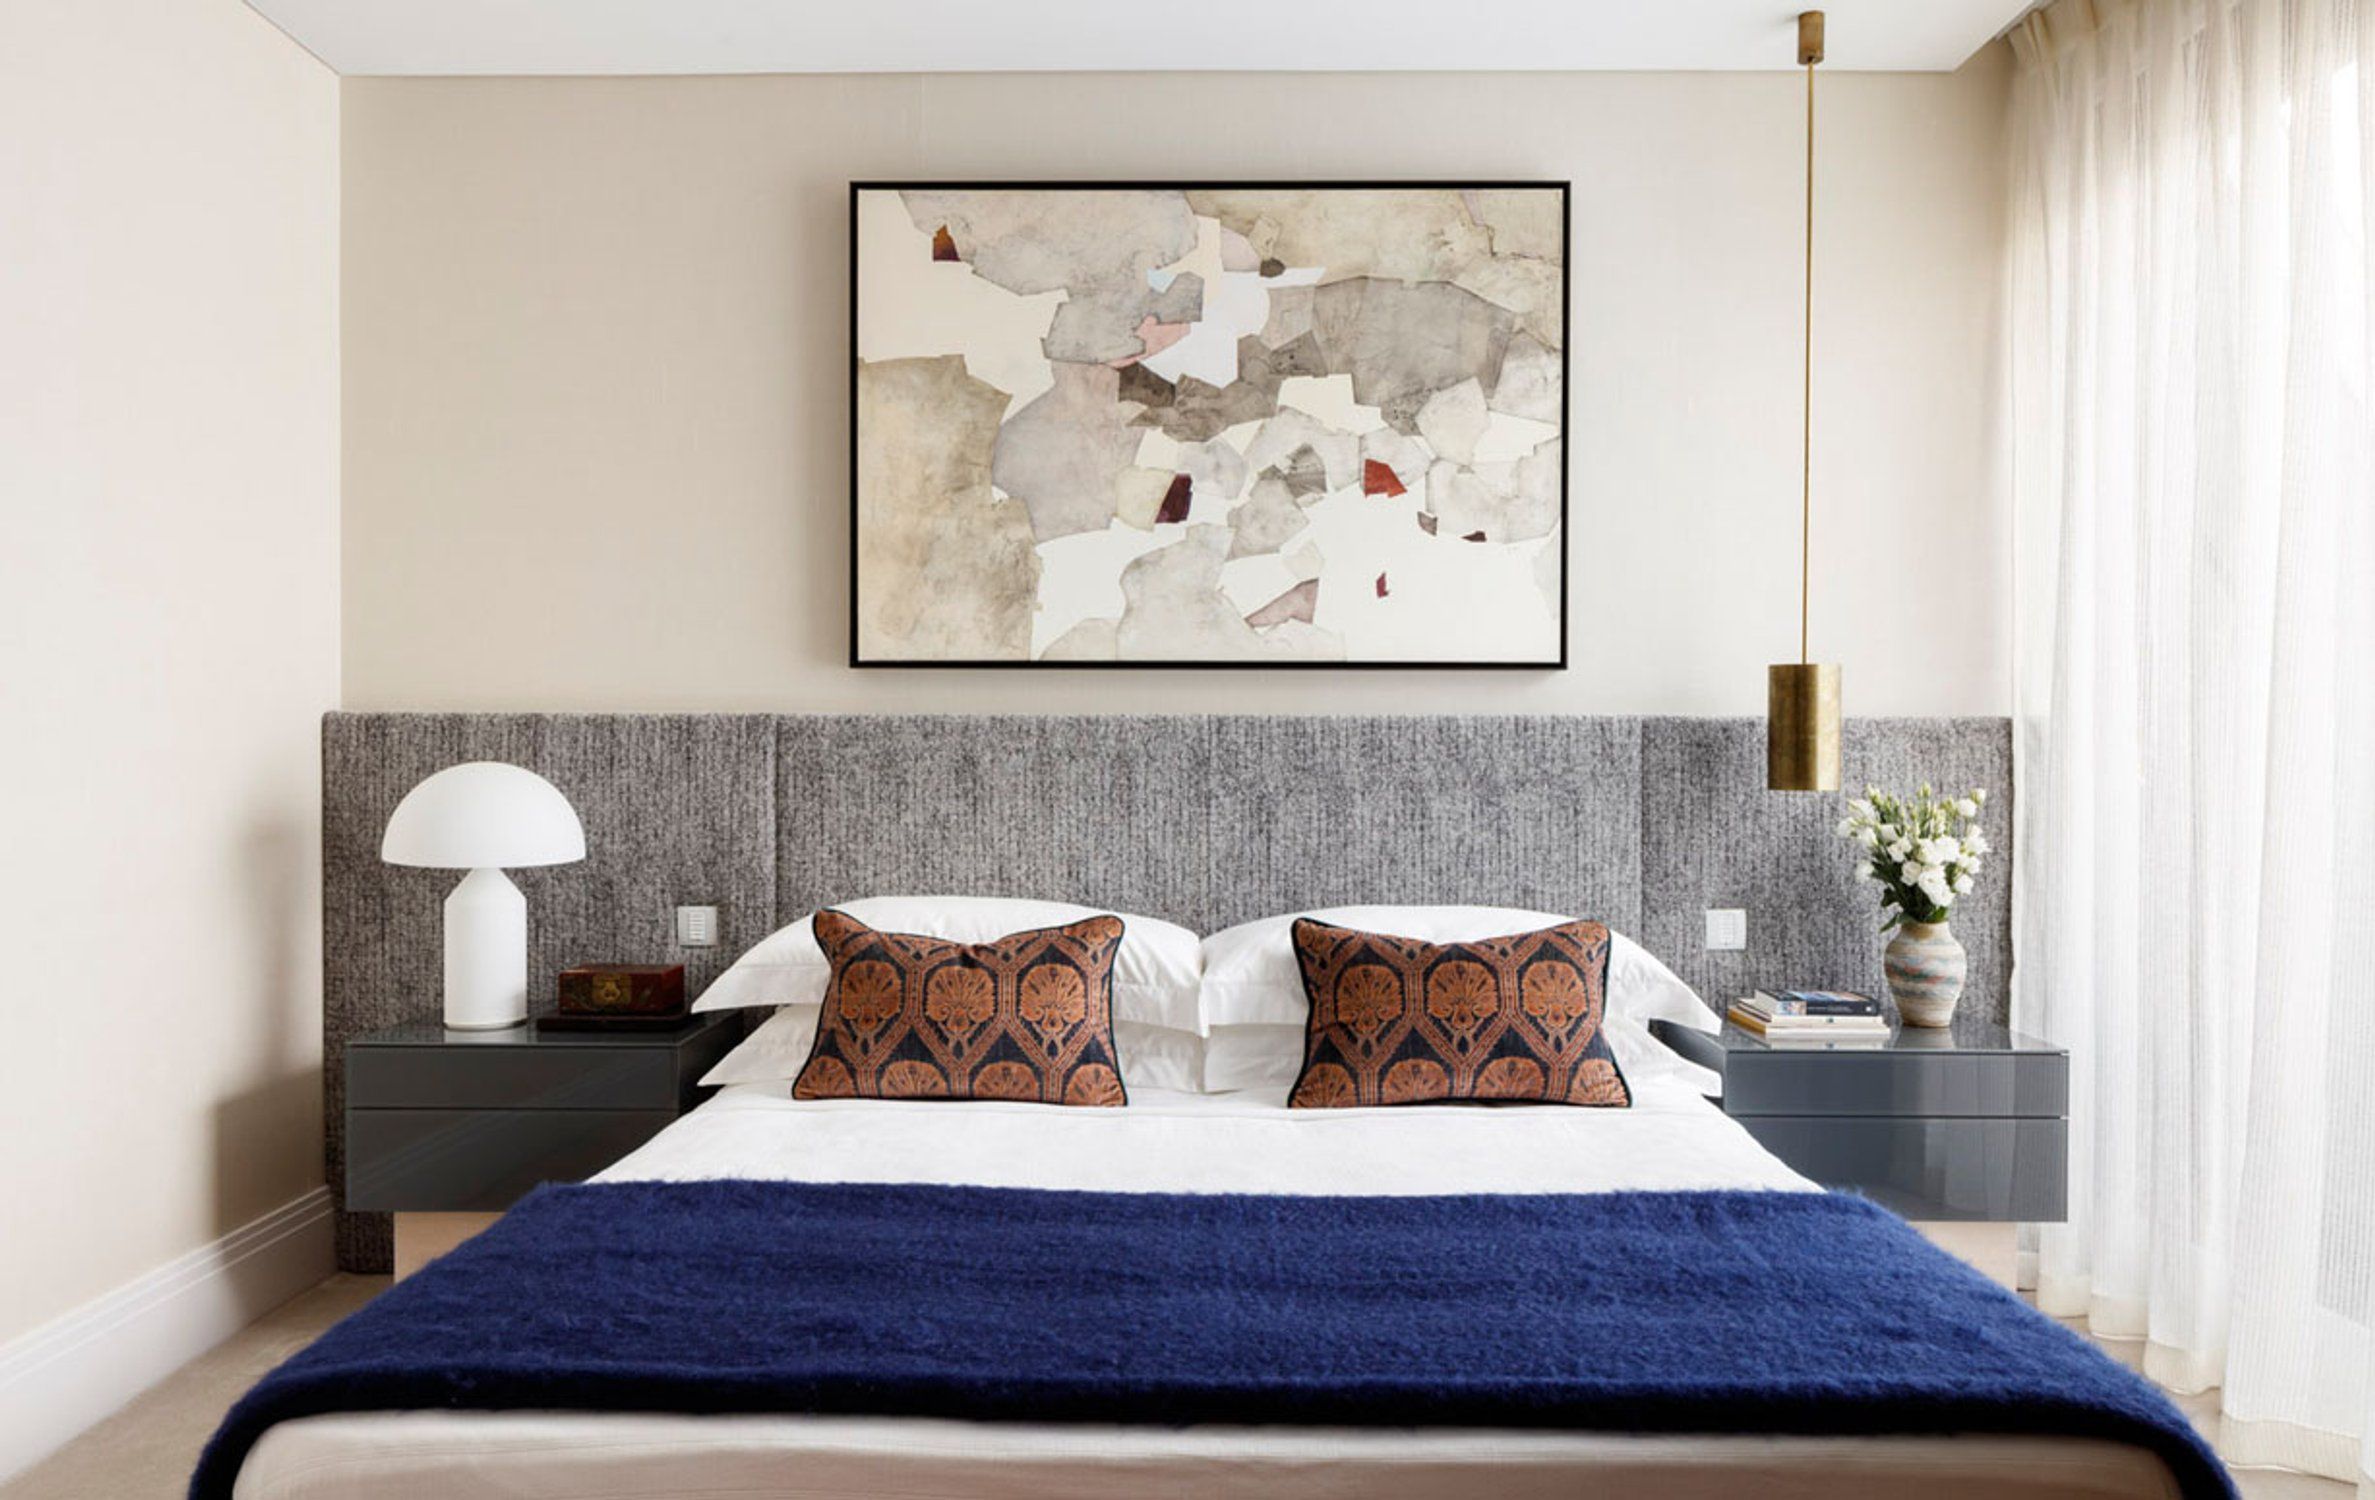 64 stylish bedroom design ideas - modern bedrooms decorating